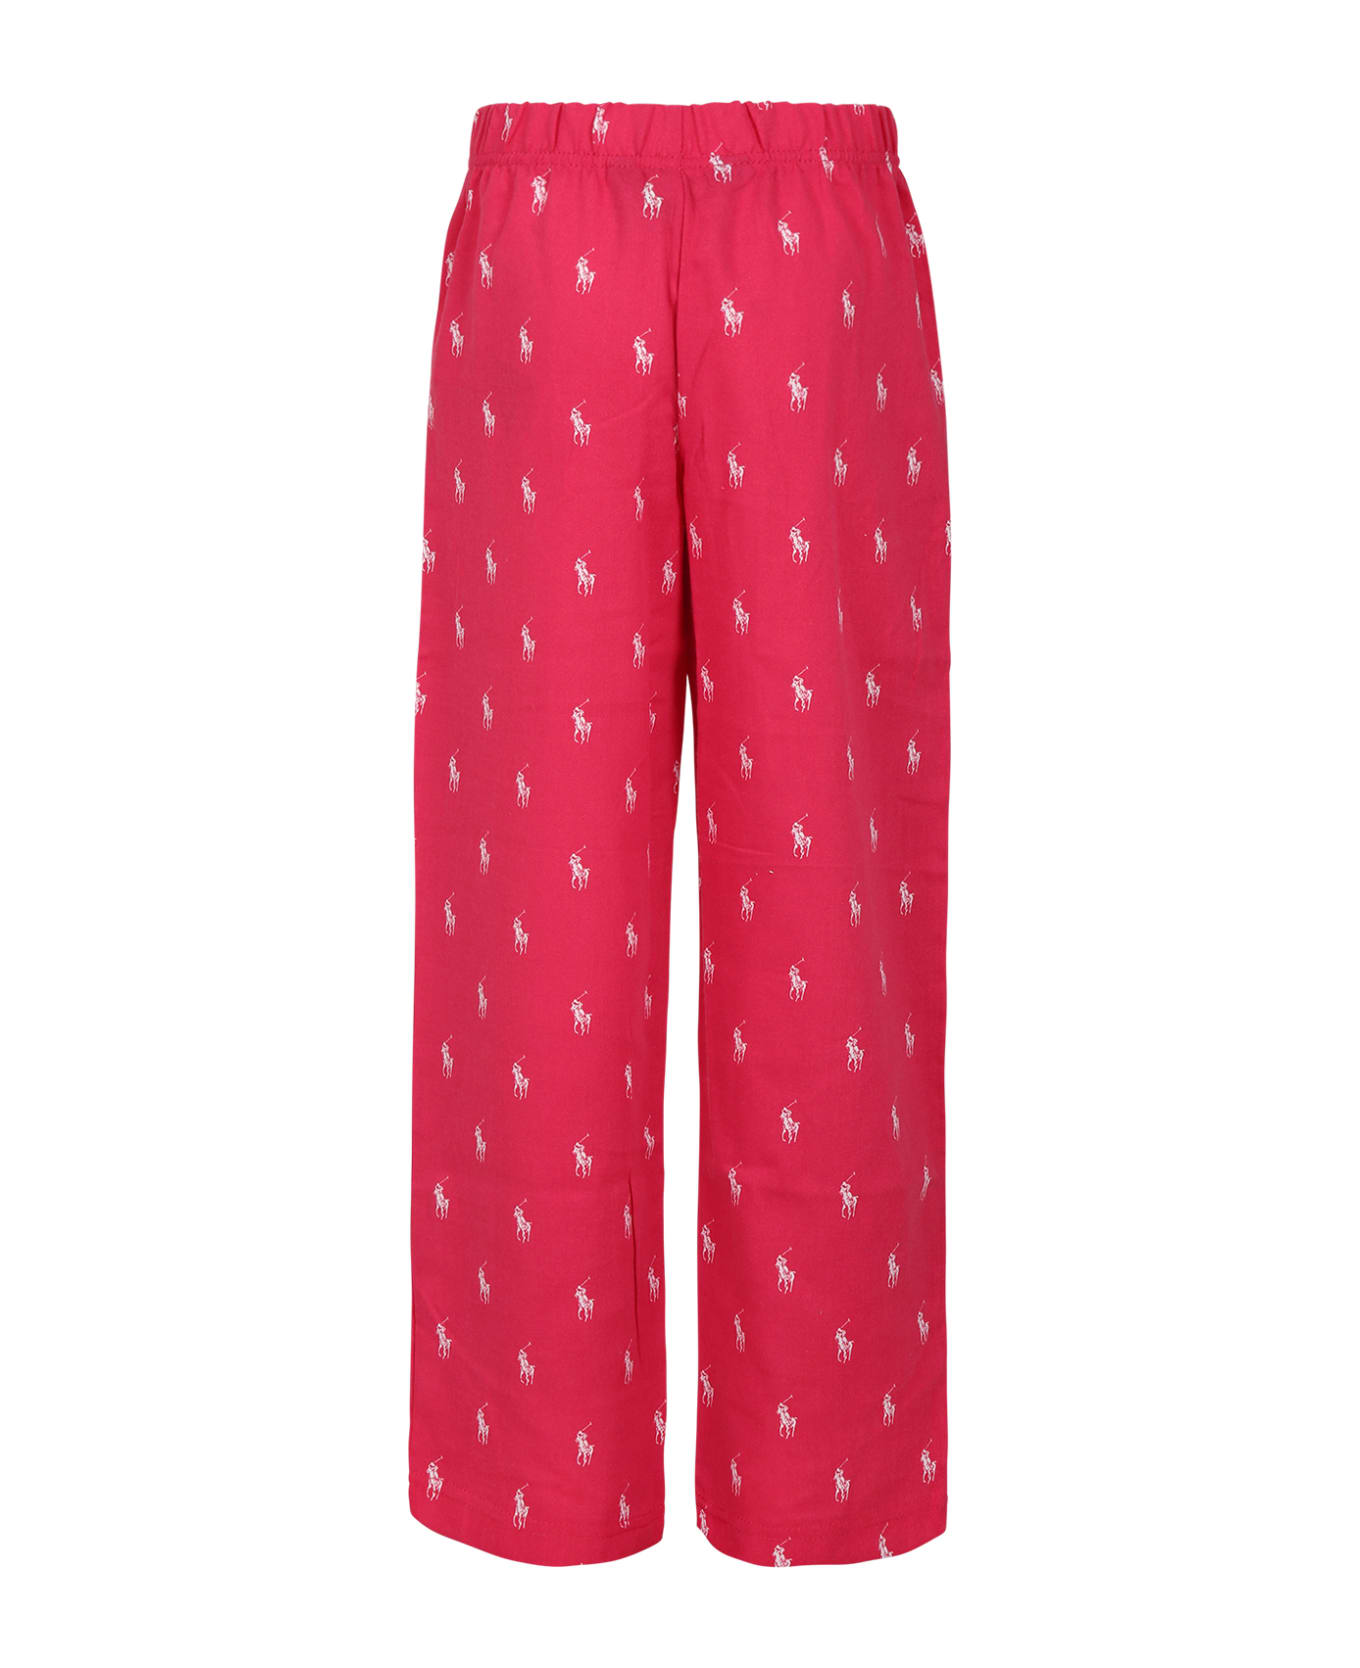 Ralph Lauren Fuchsia Pajamas Pants For Girl - Fuchsia アンダーウェア